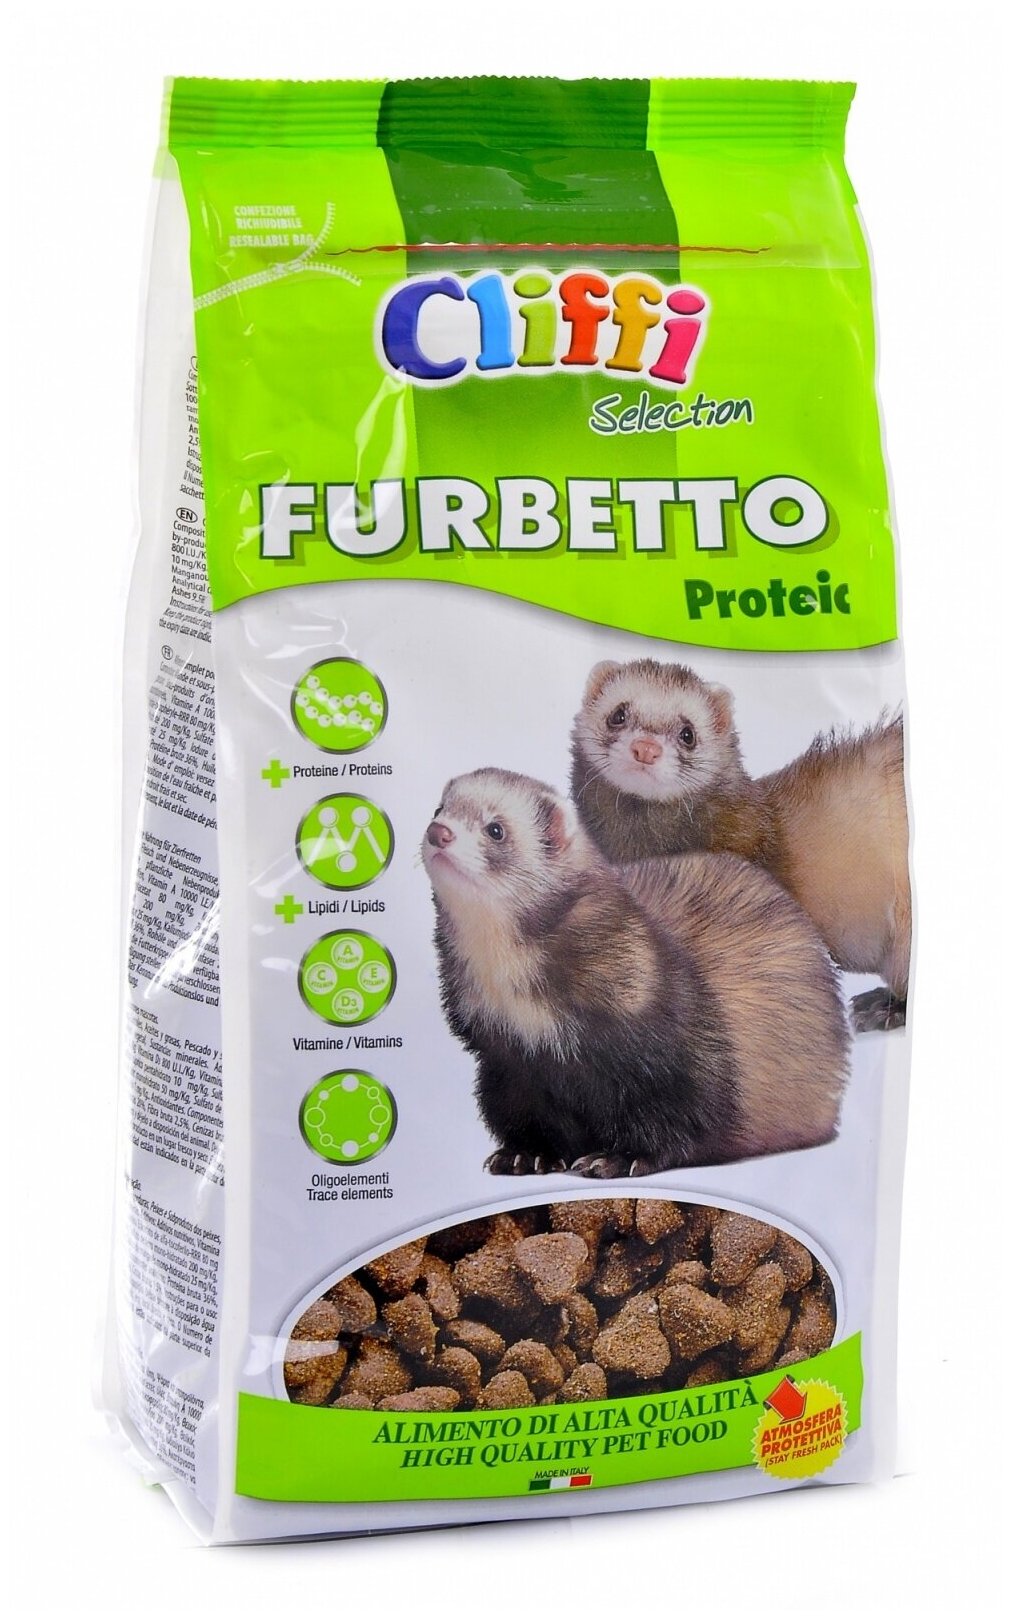 Cliffi Для хорьков протеиновый (Furbetto proteic SELECTION) 0.8 кг